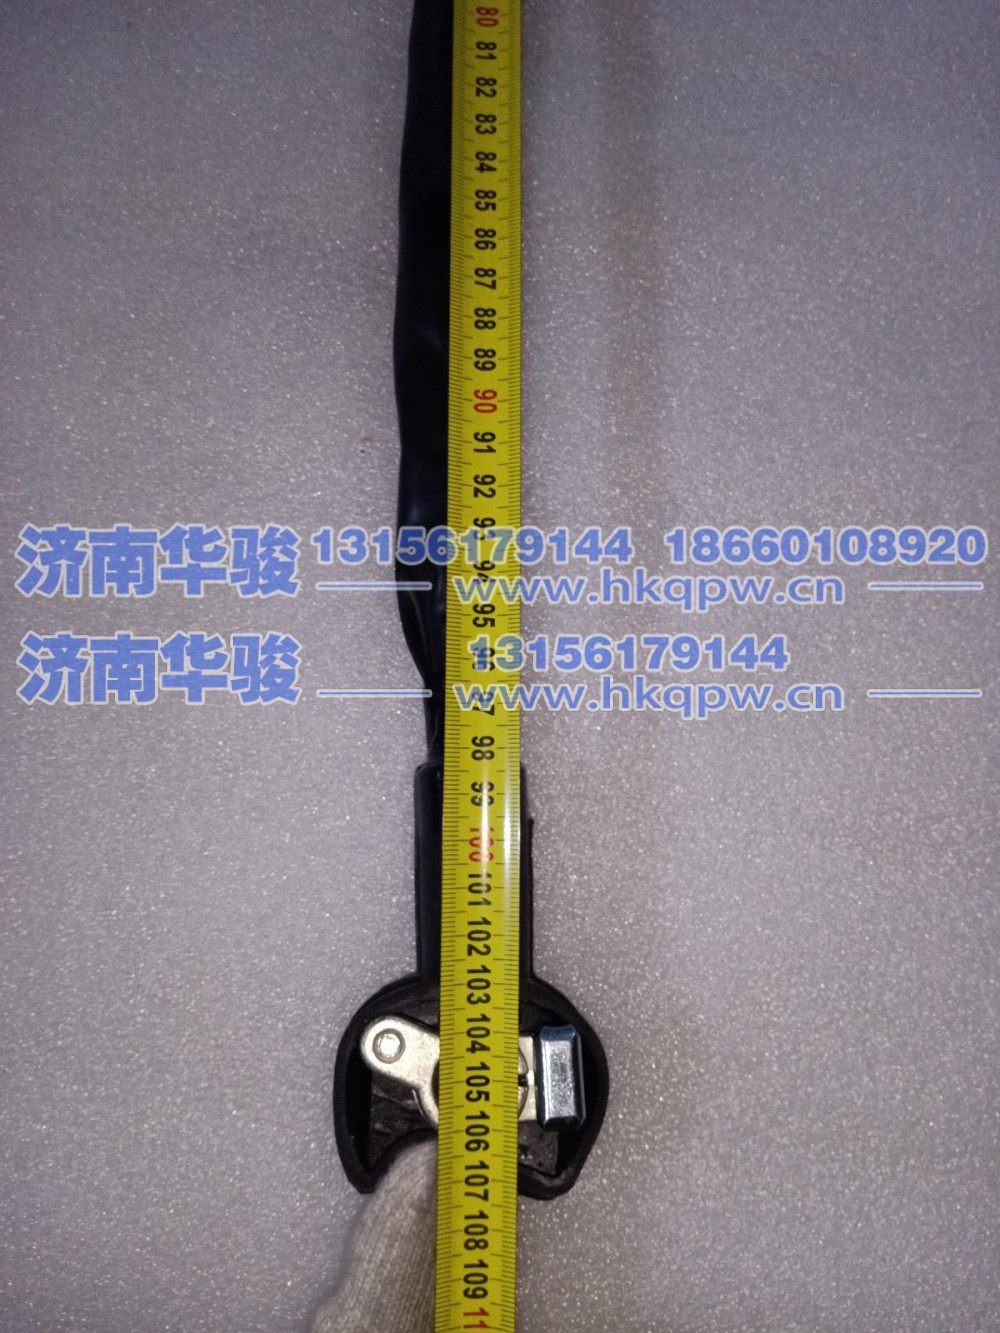 40V-3X020,负极电缆,济南华骏汽车贸易有限公司